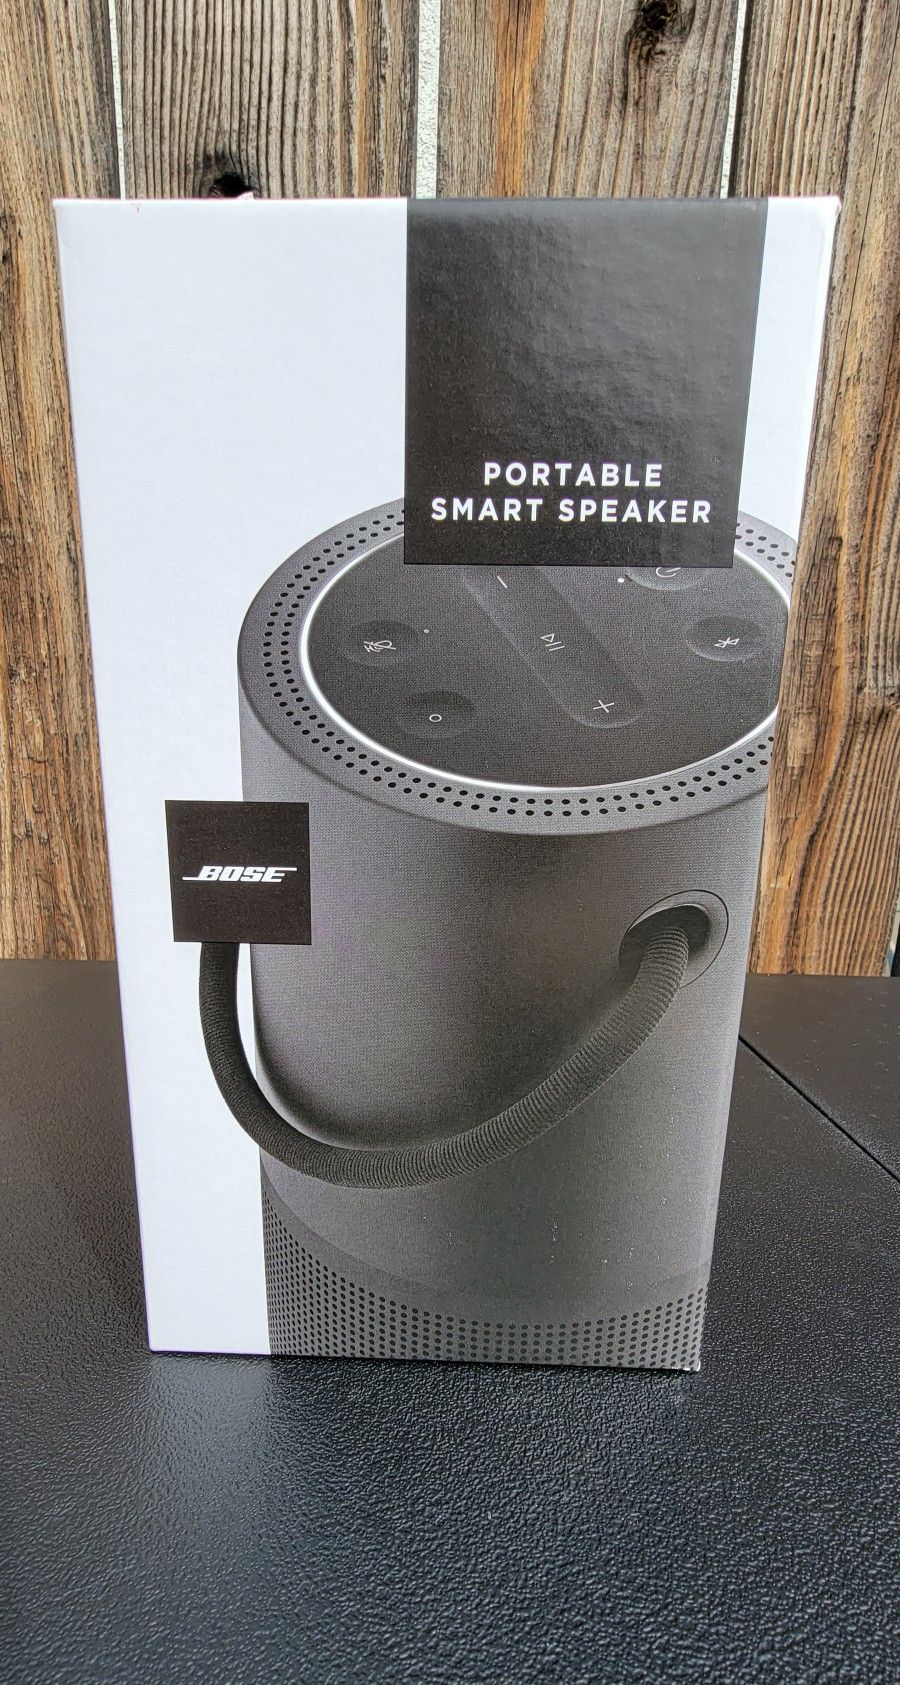 BOSE Portable Smart Speaker - New Not Opened Factory Sealed *Read Description 1st